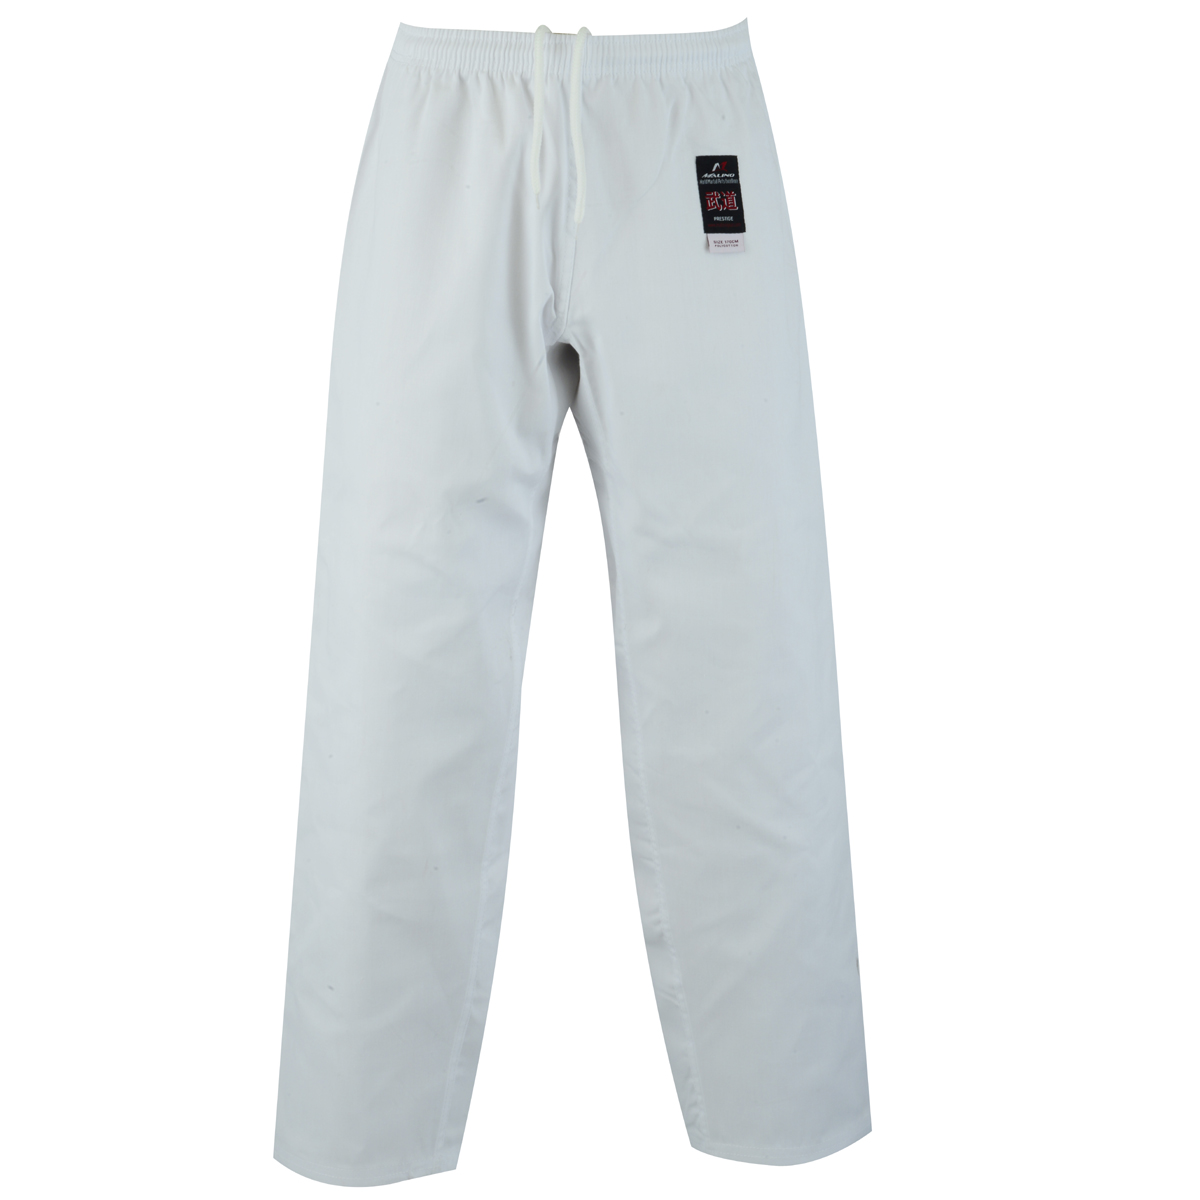 Malino Adult Student Karate Trousers PC White - 7oz